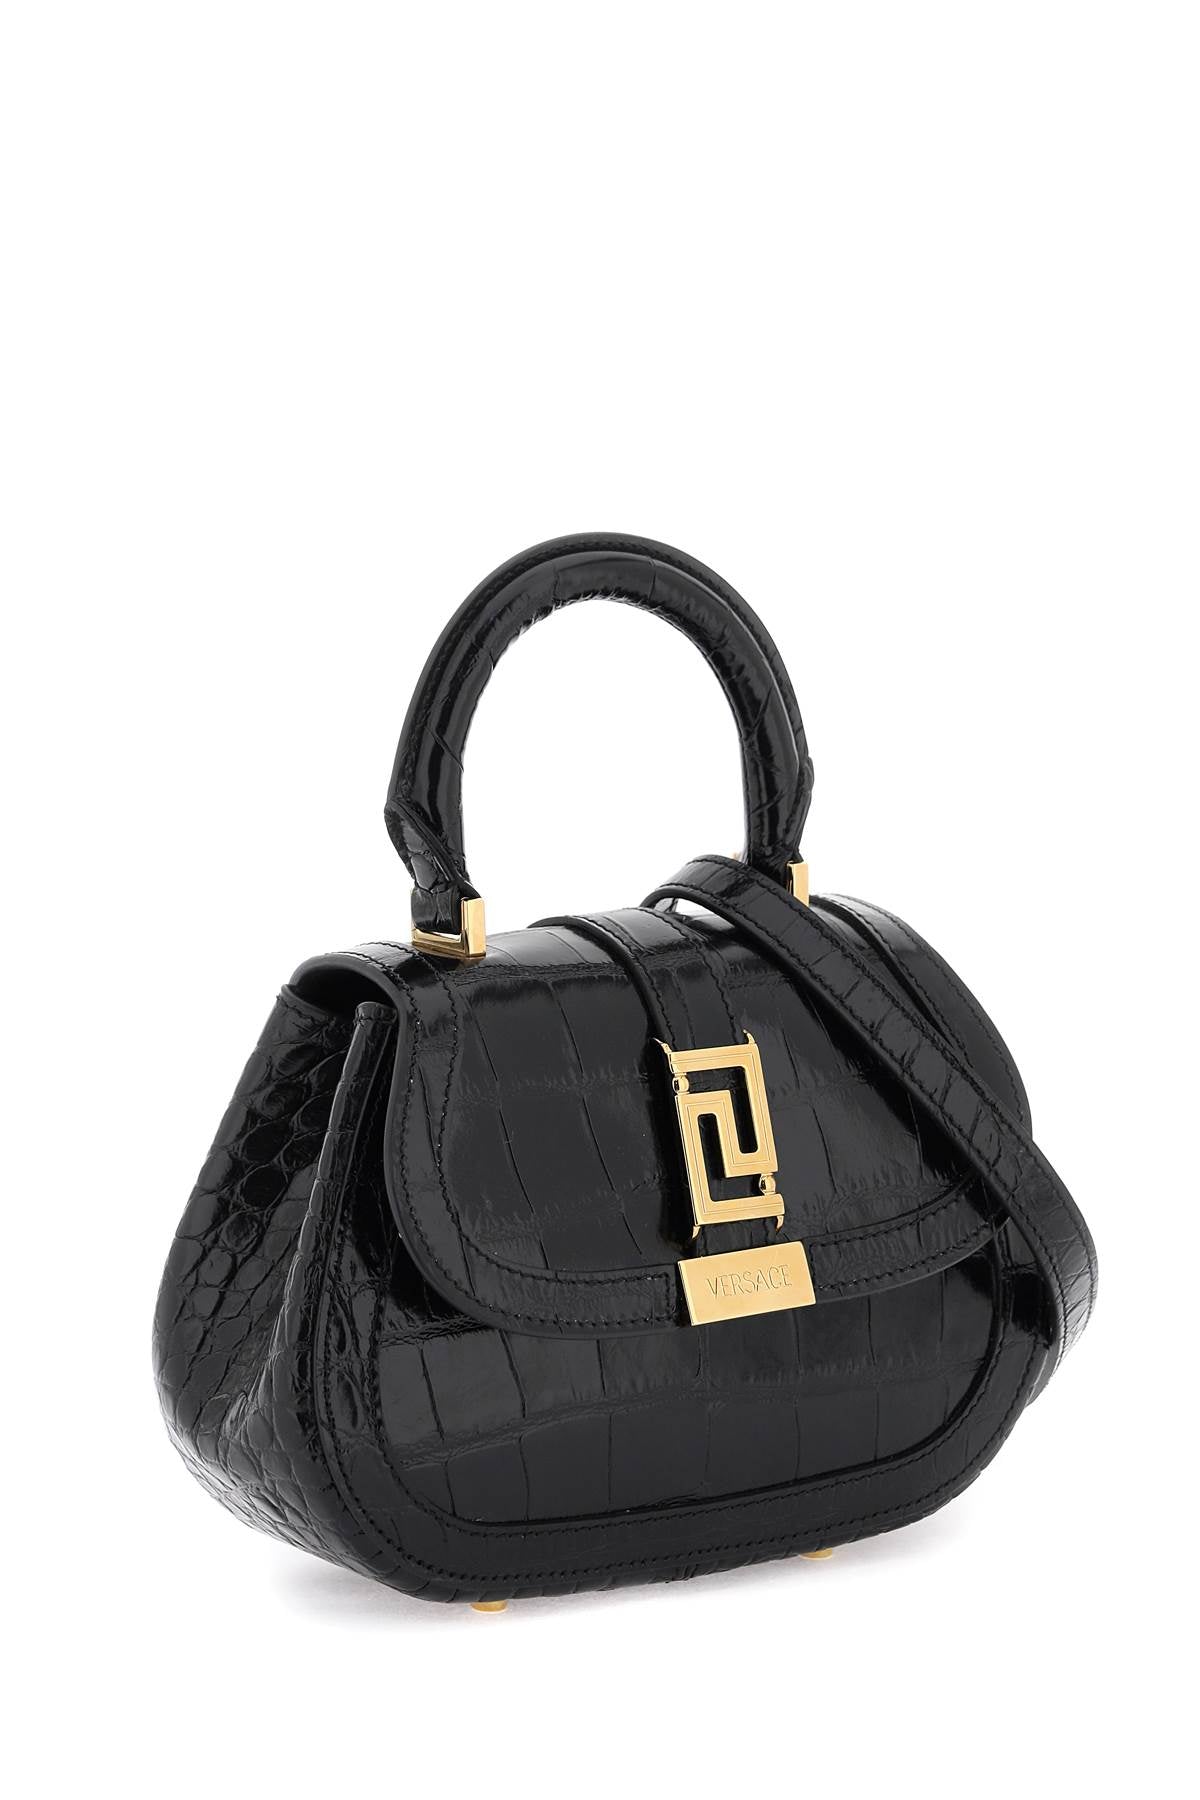 VERSACE Black Croco-Embossed Mini Handbag with Greek Key Detail and Gold Hardware